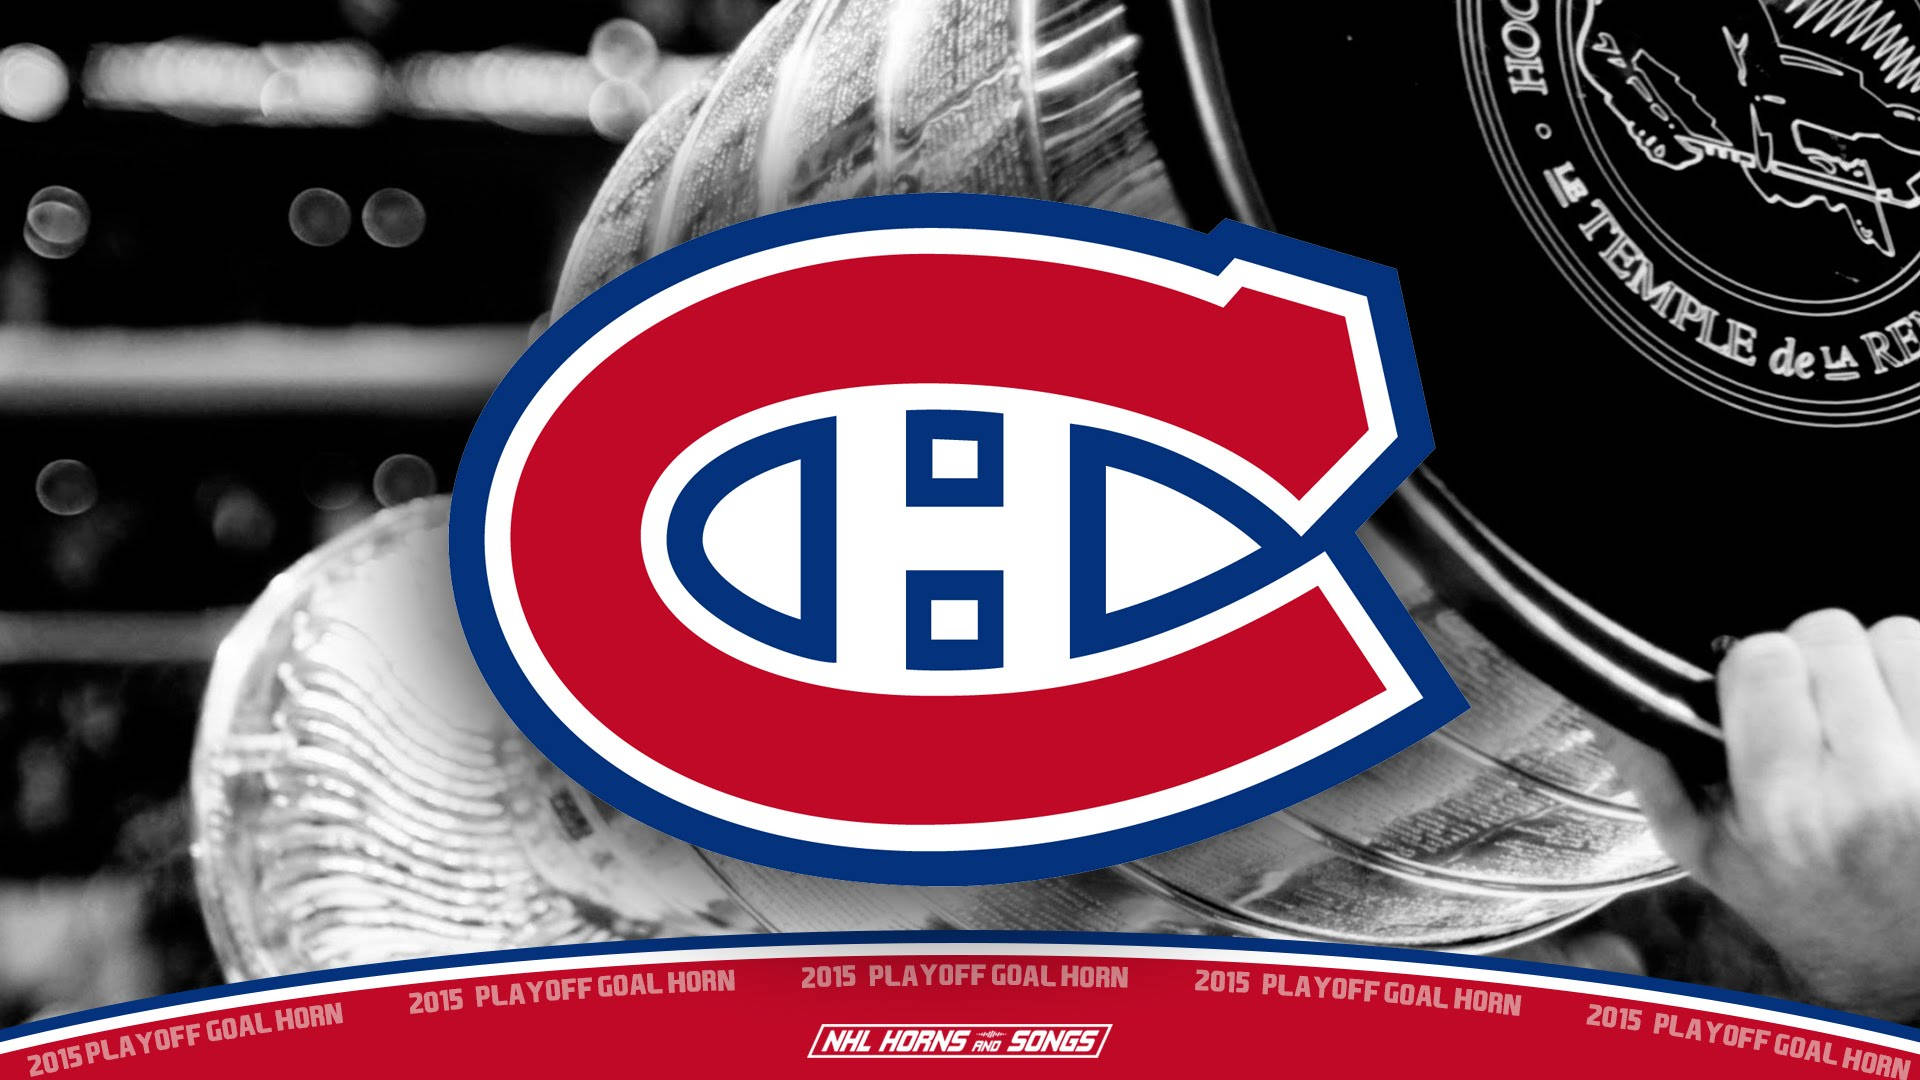 Montrealcanadiens Nhl: Montreal Canadiens Nhl Wallpaper